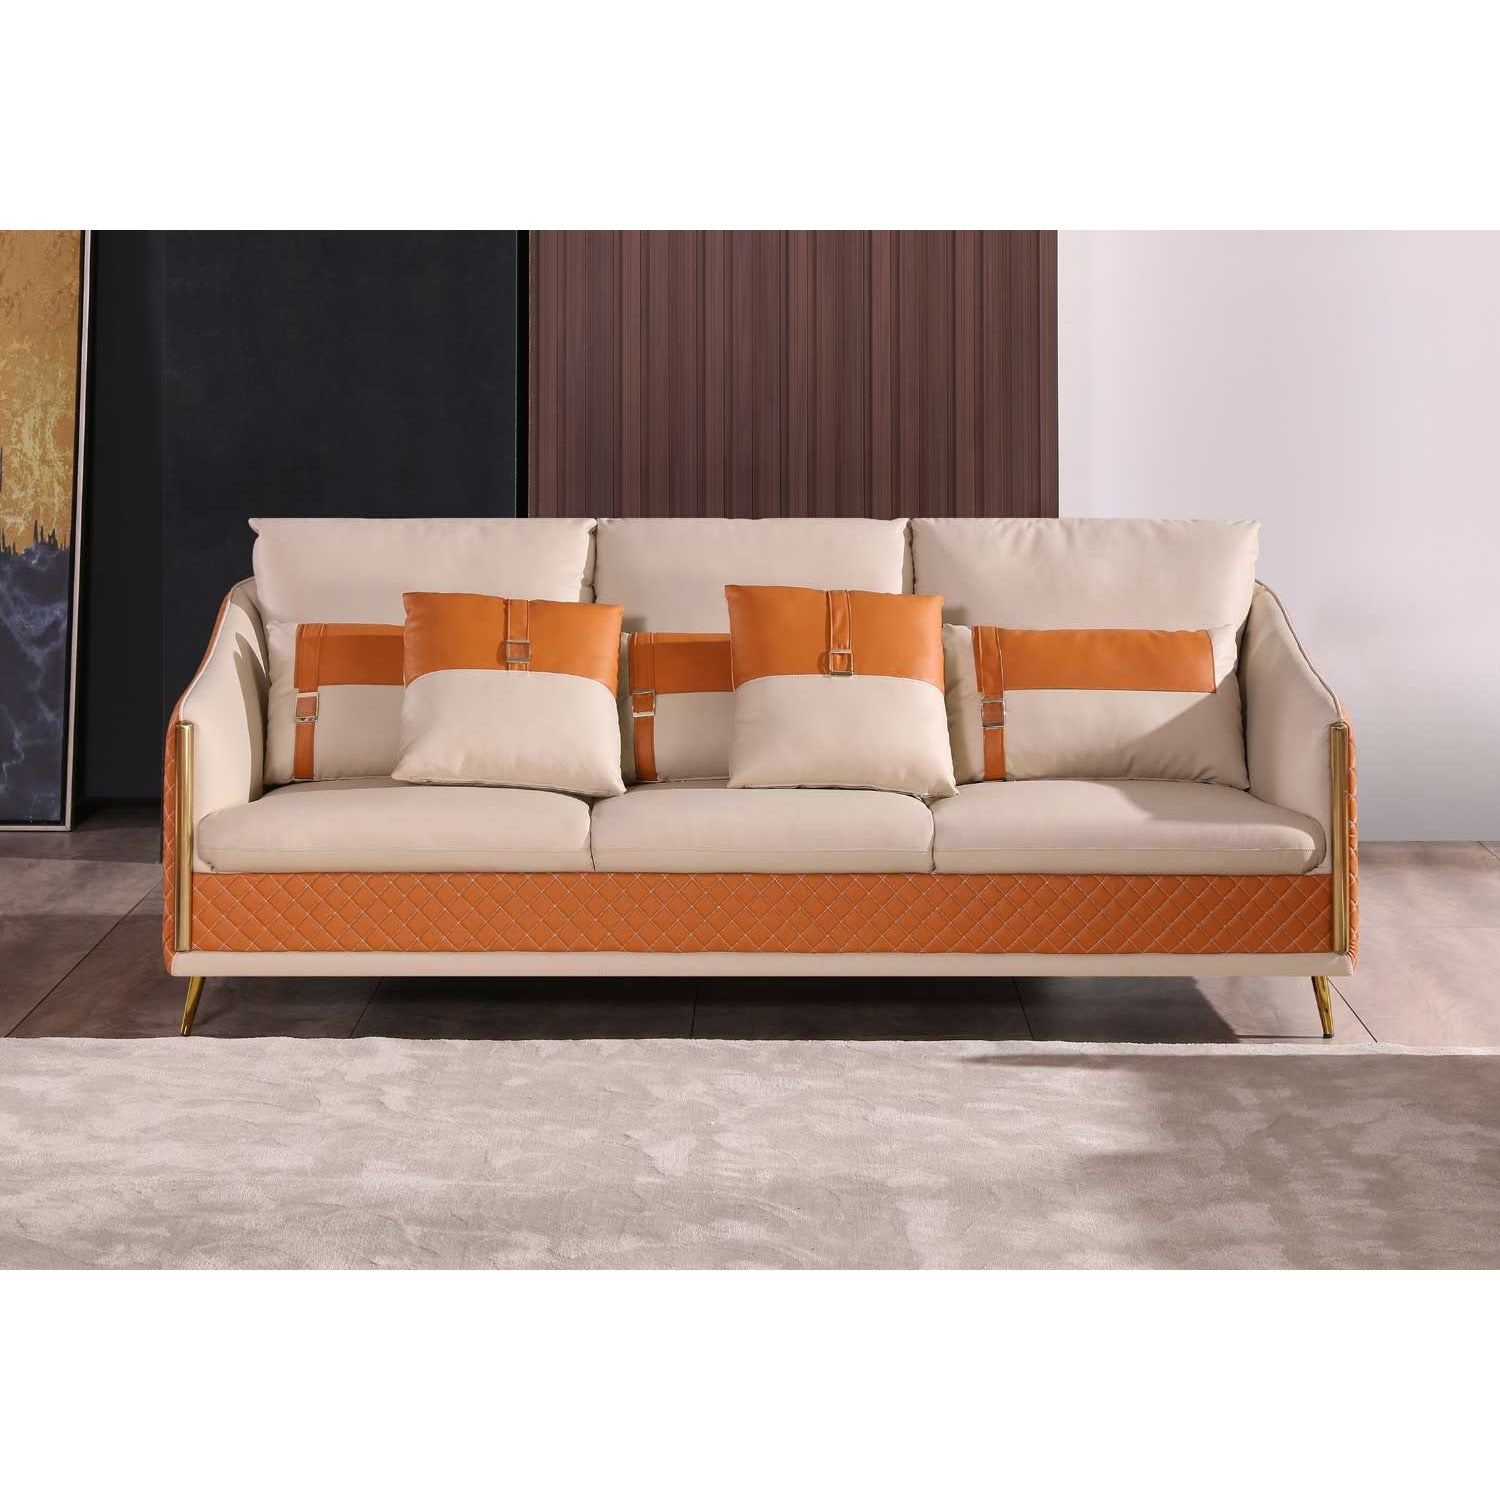 European Furniture - Icaro Sofa in Off White-Orange - 64455-S - New Star Living